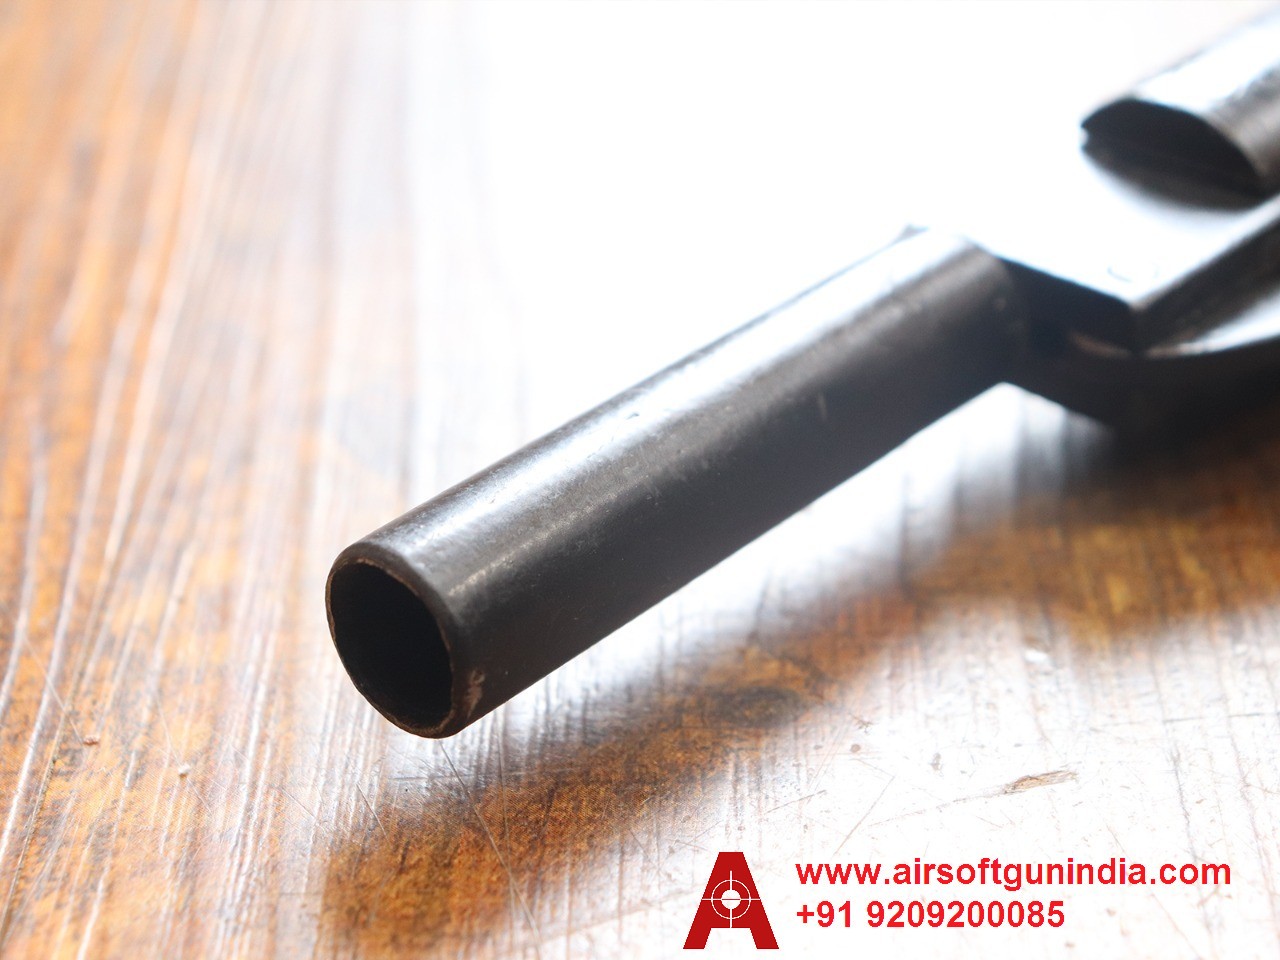 Baby Brown Butt Single-Shot .177 Caliber / 4.5 Mm Indian Air Pistol By Airsoft Gun India